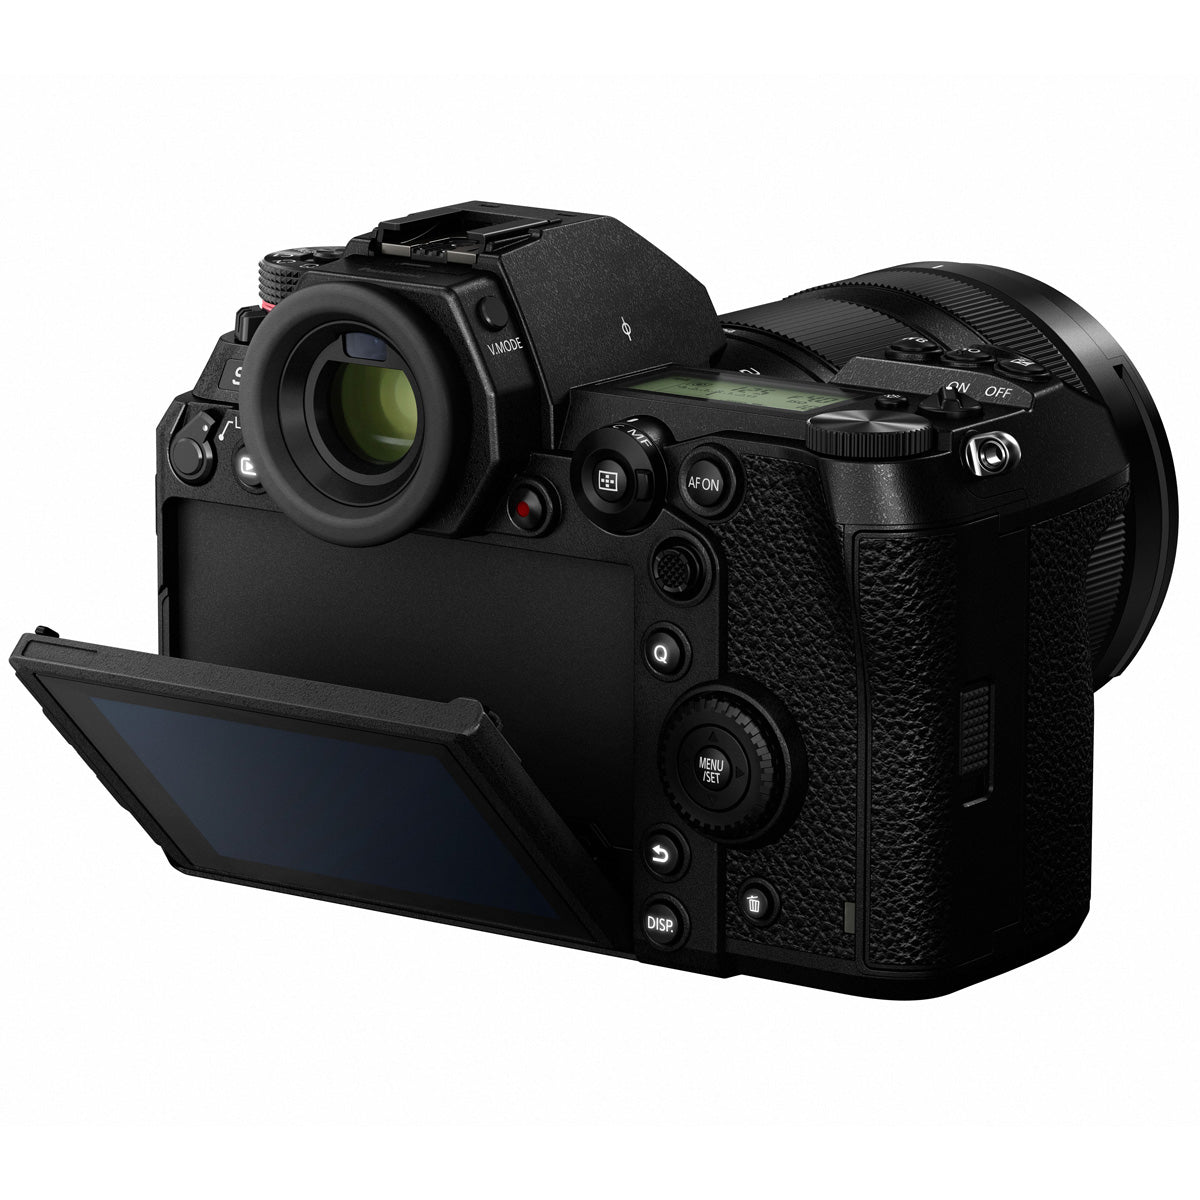 Panasonic Lumix S1R Mirrorless Camera Body with 24-105mm f/4 Lens